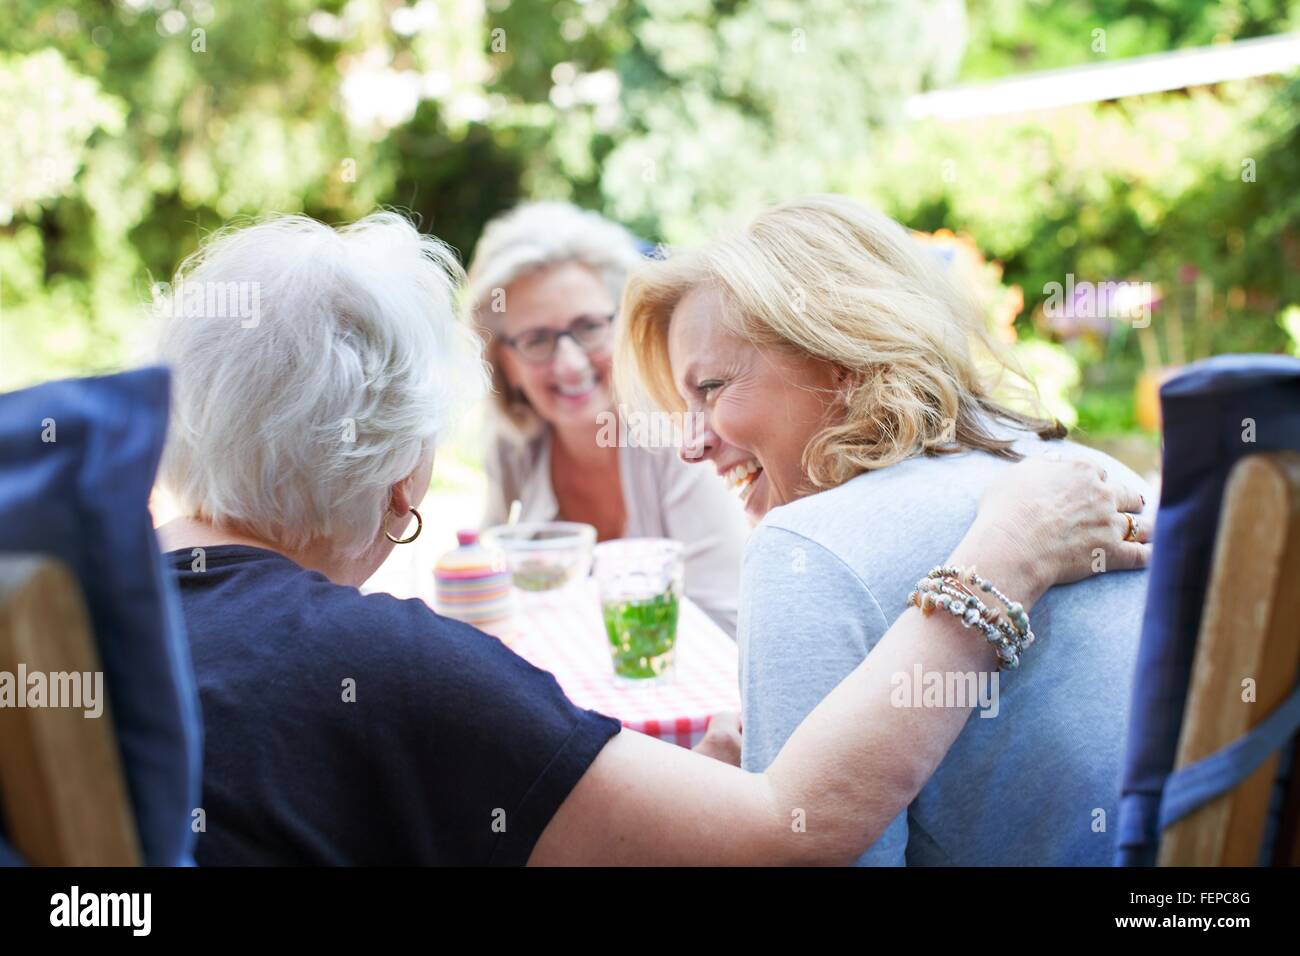 Tre donne insieme rilassante nel giardino, ridendo Foto Stock